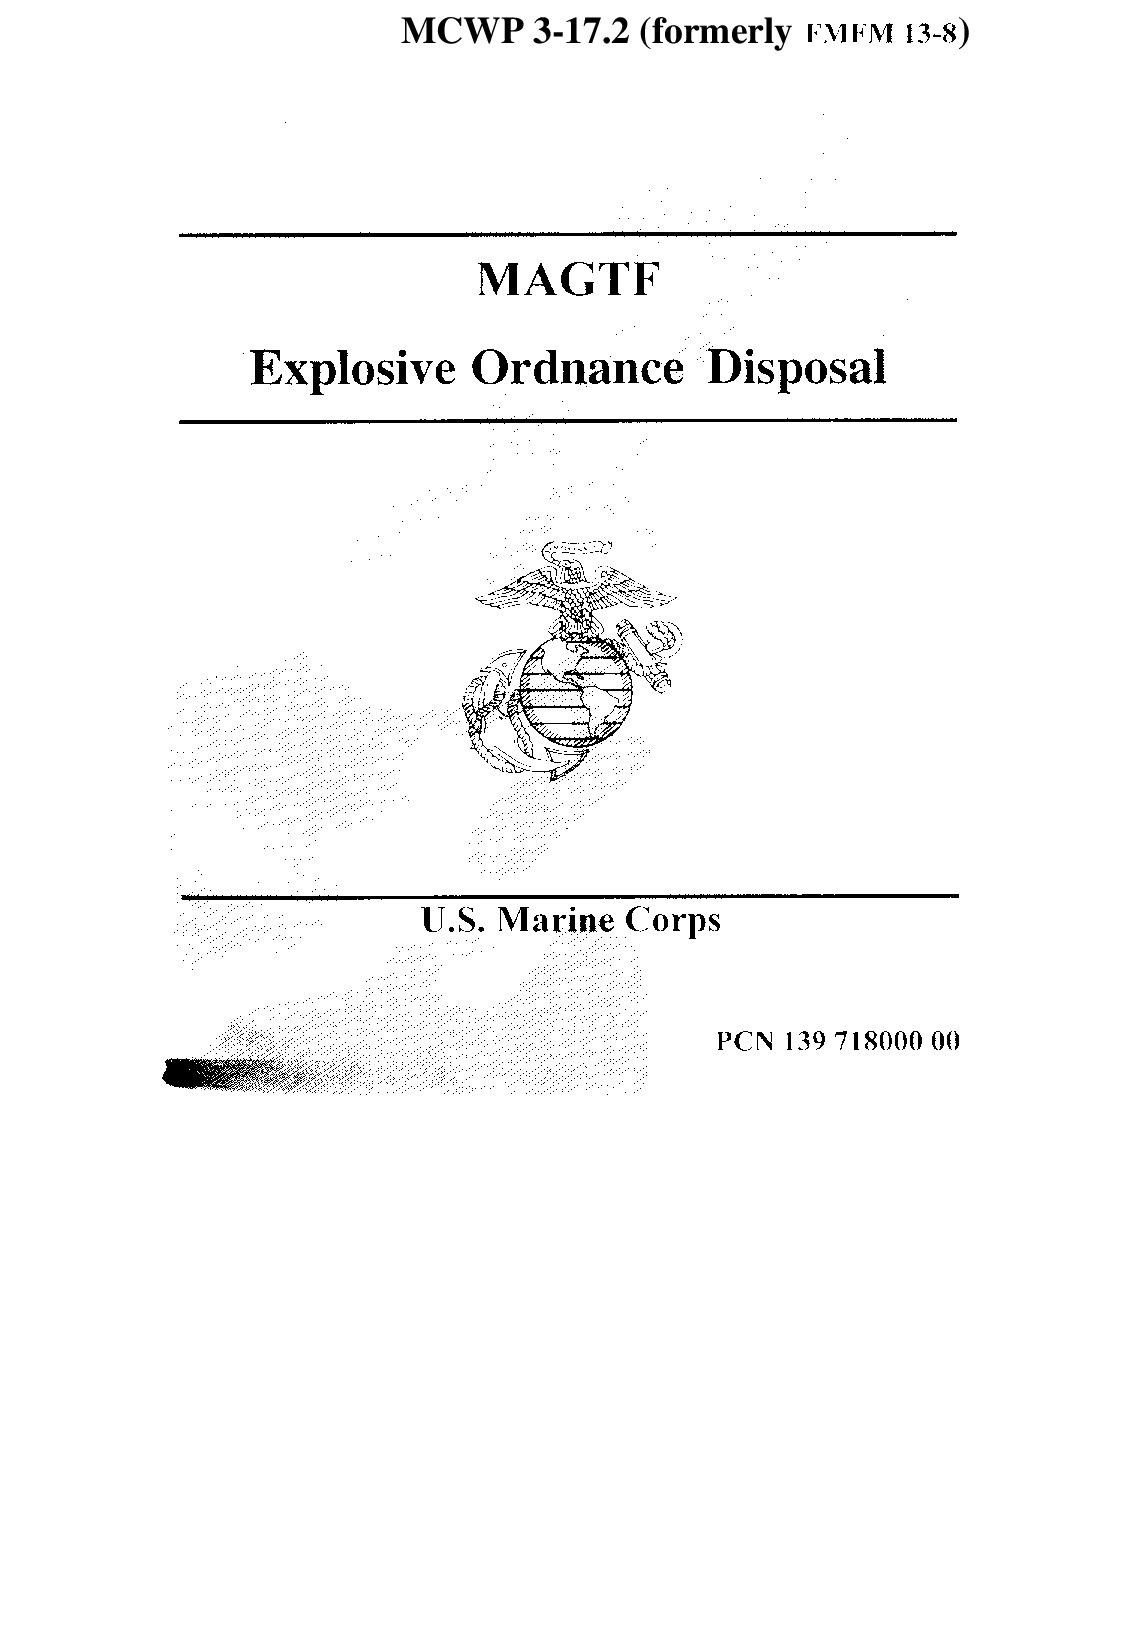 MCWP 3-17.2 Explosive Ordnance Disposal